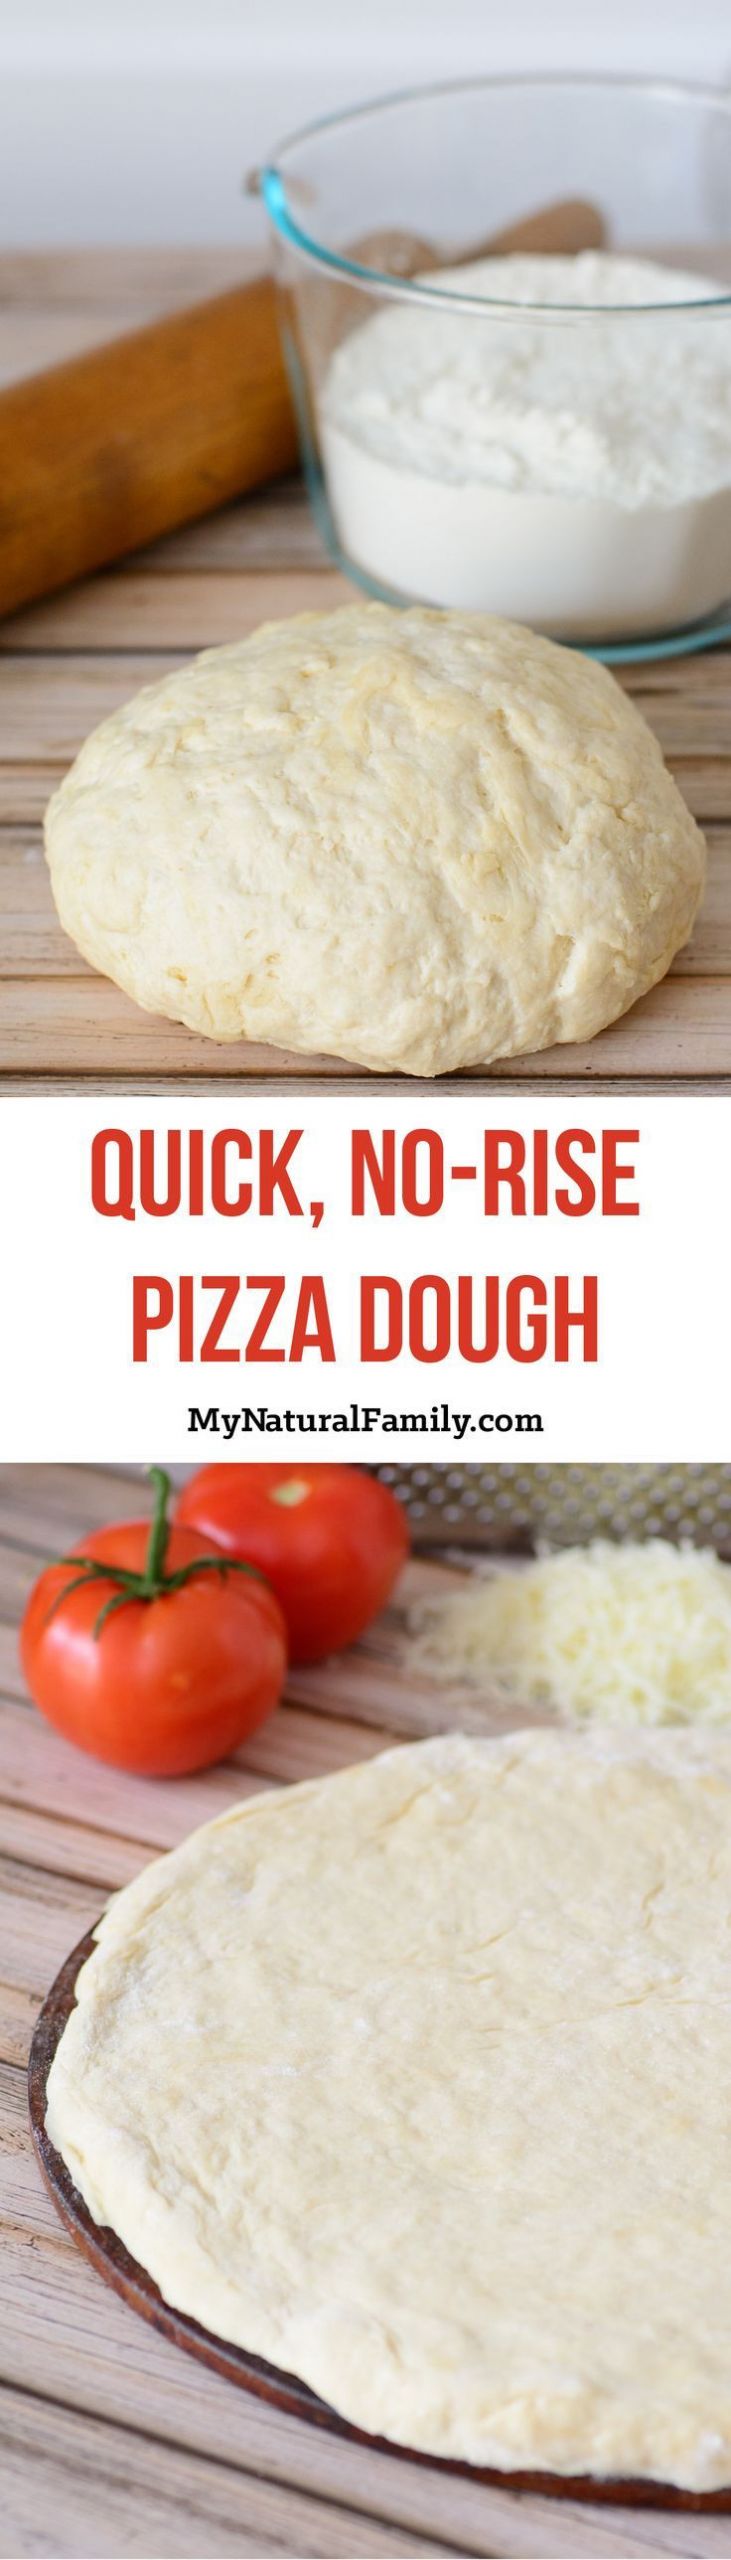 Quick Pizza Dough No Rise
 The Best Quick & Easy No Rise Einkorn Pizza Dough